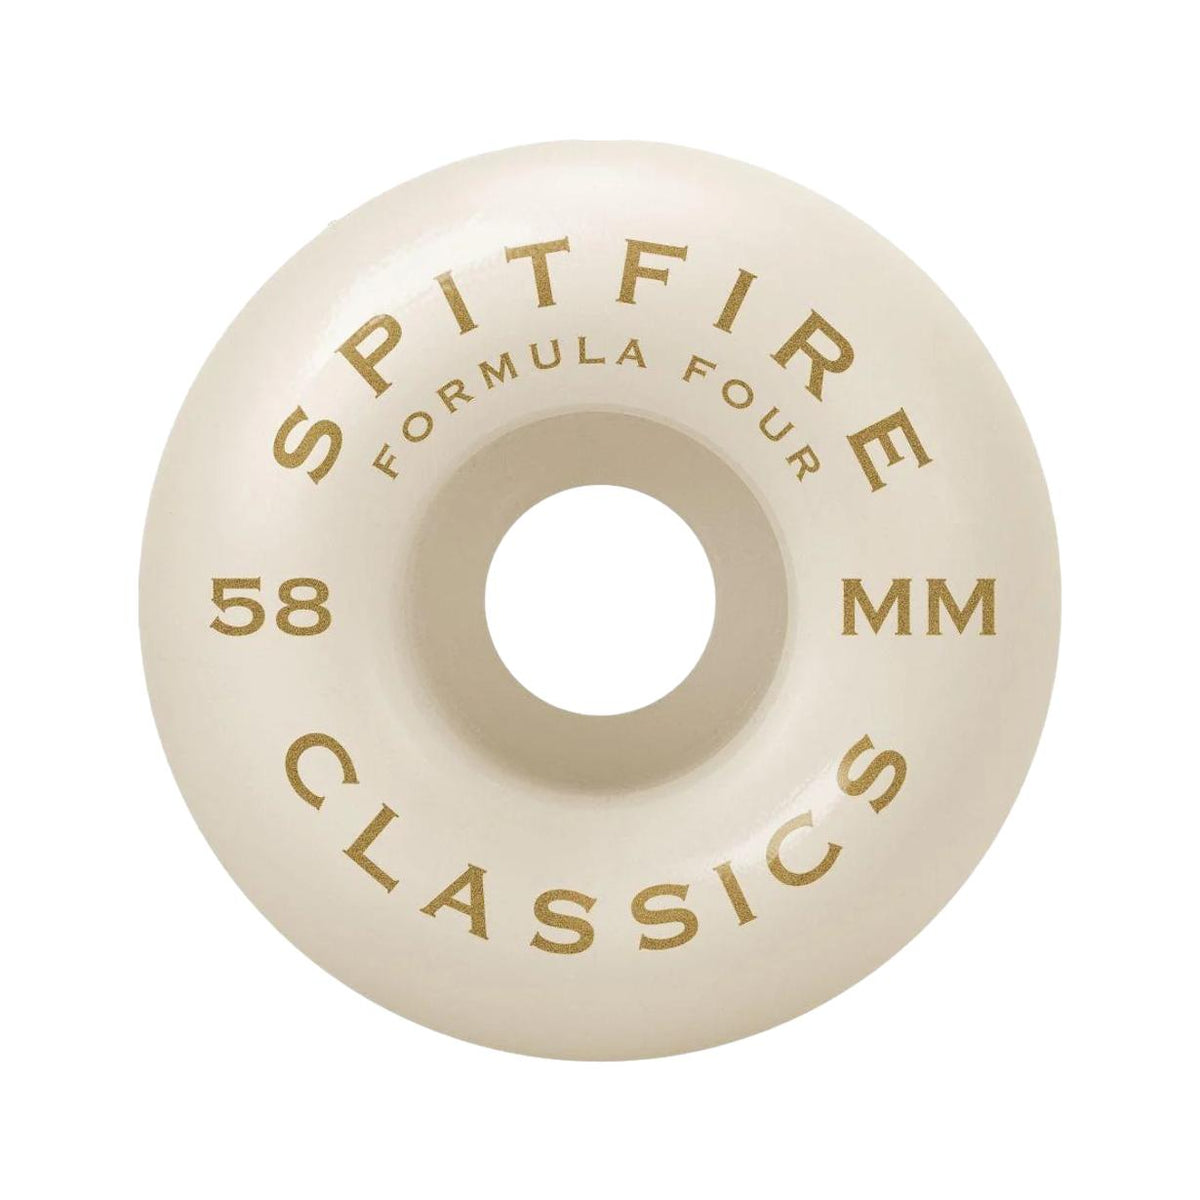 SF F4 101 Classic Swirl 58mm - Venue Skateboards